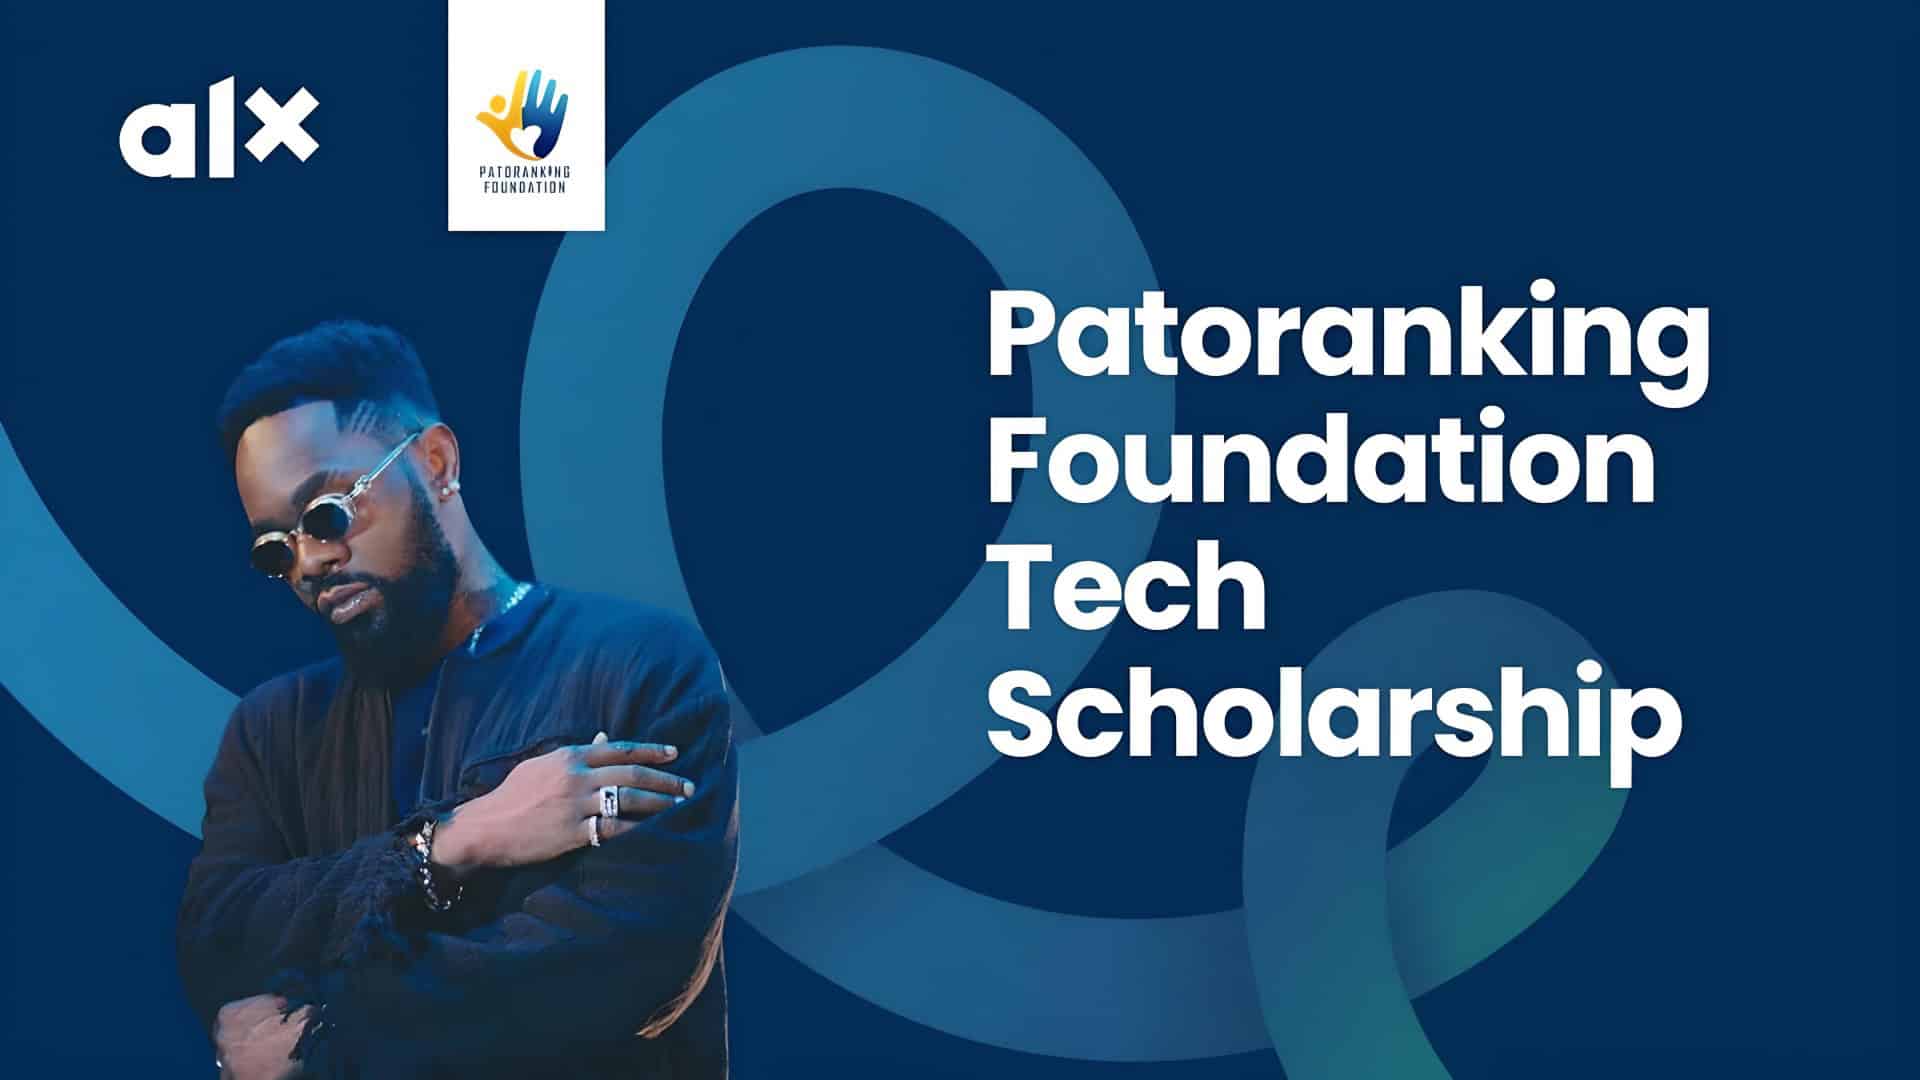 Patoranking Foundation Tech Scholarship